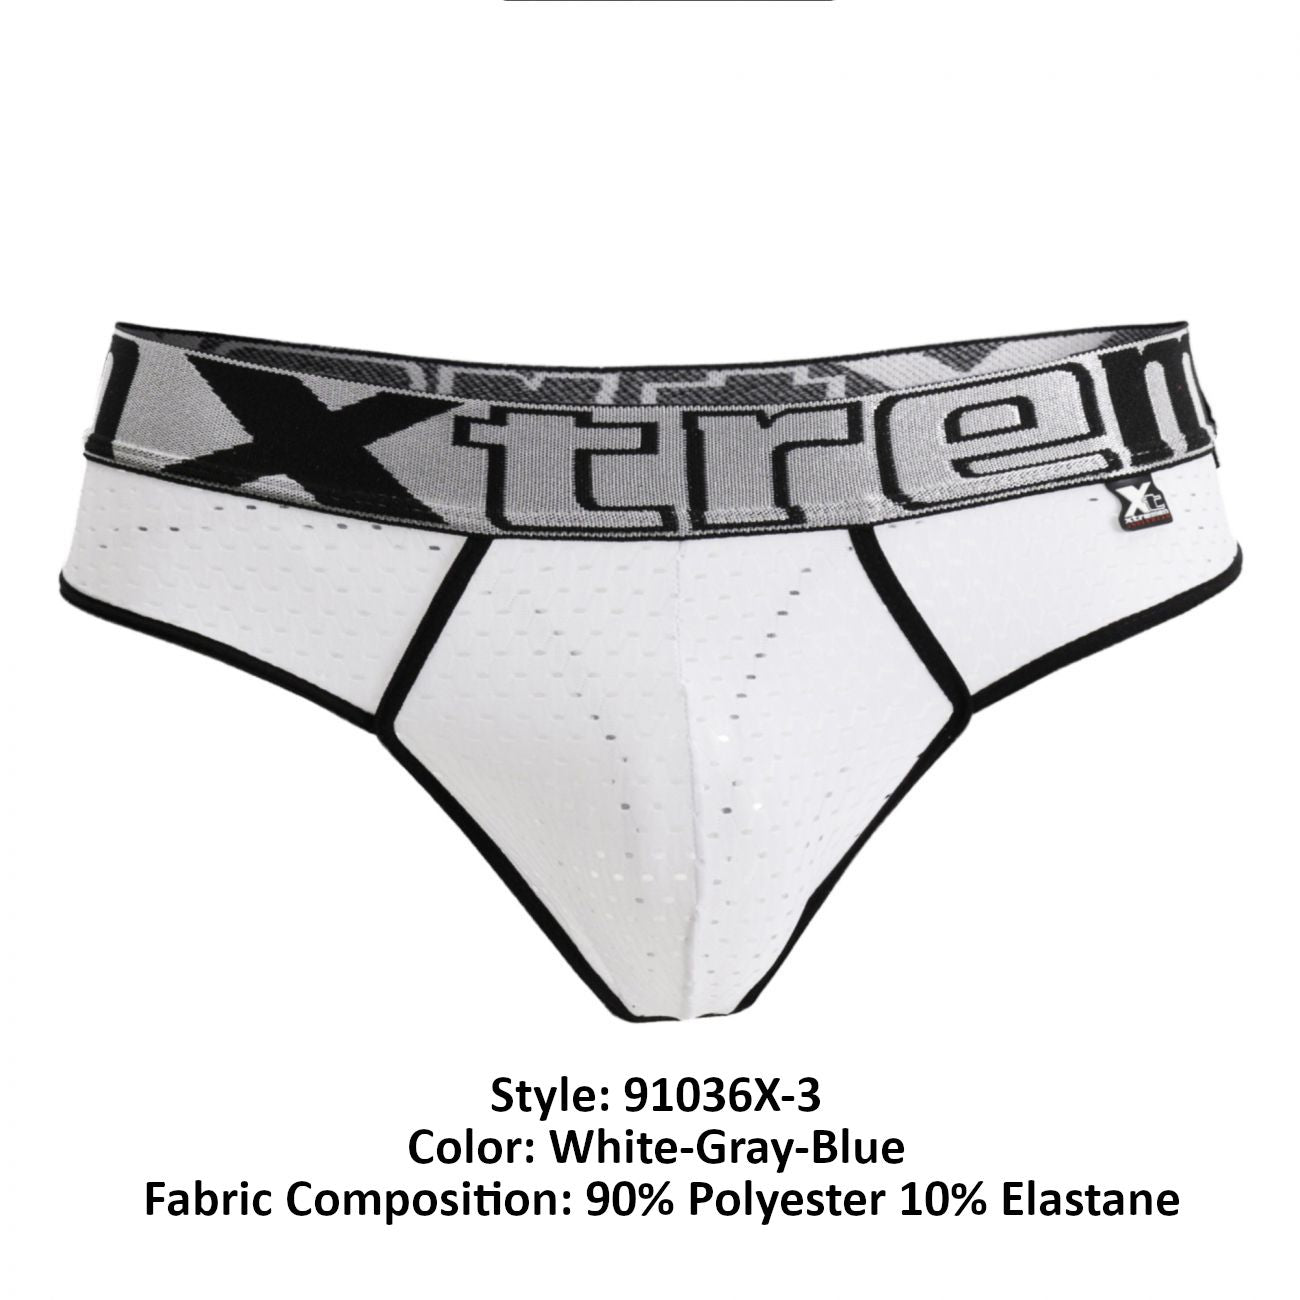 Xtremen 91036X-3 3PK Thongs White-Gray-Blue Plus Sizes